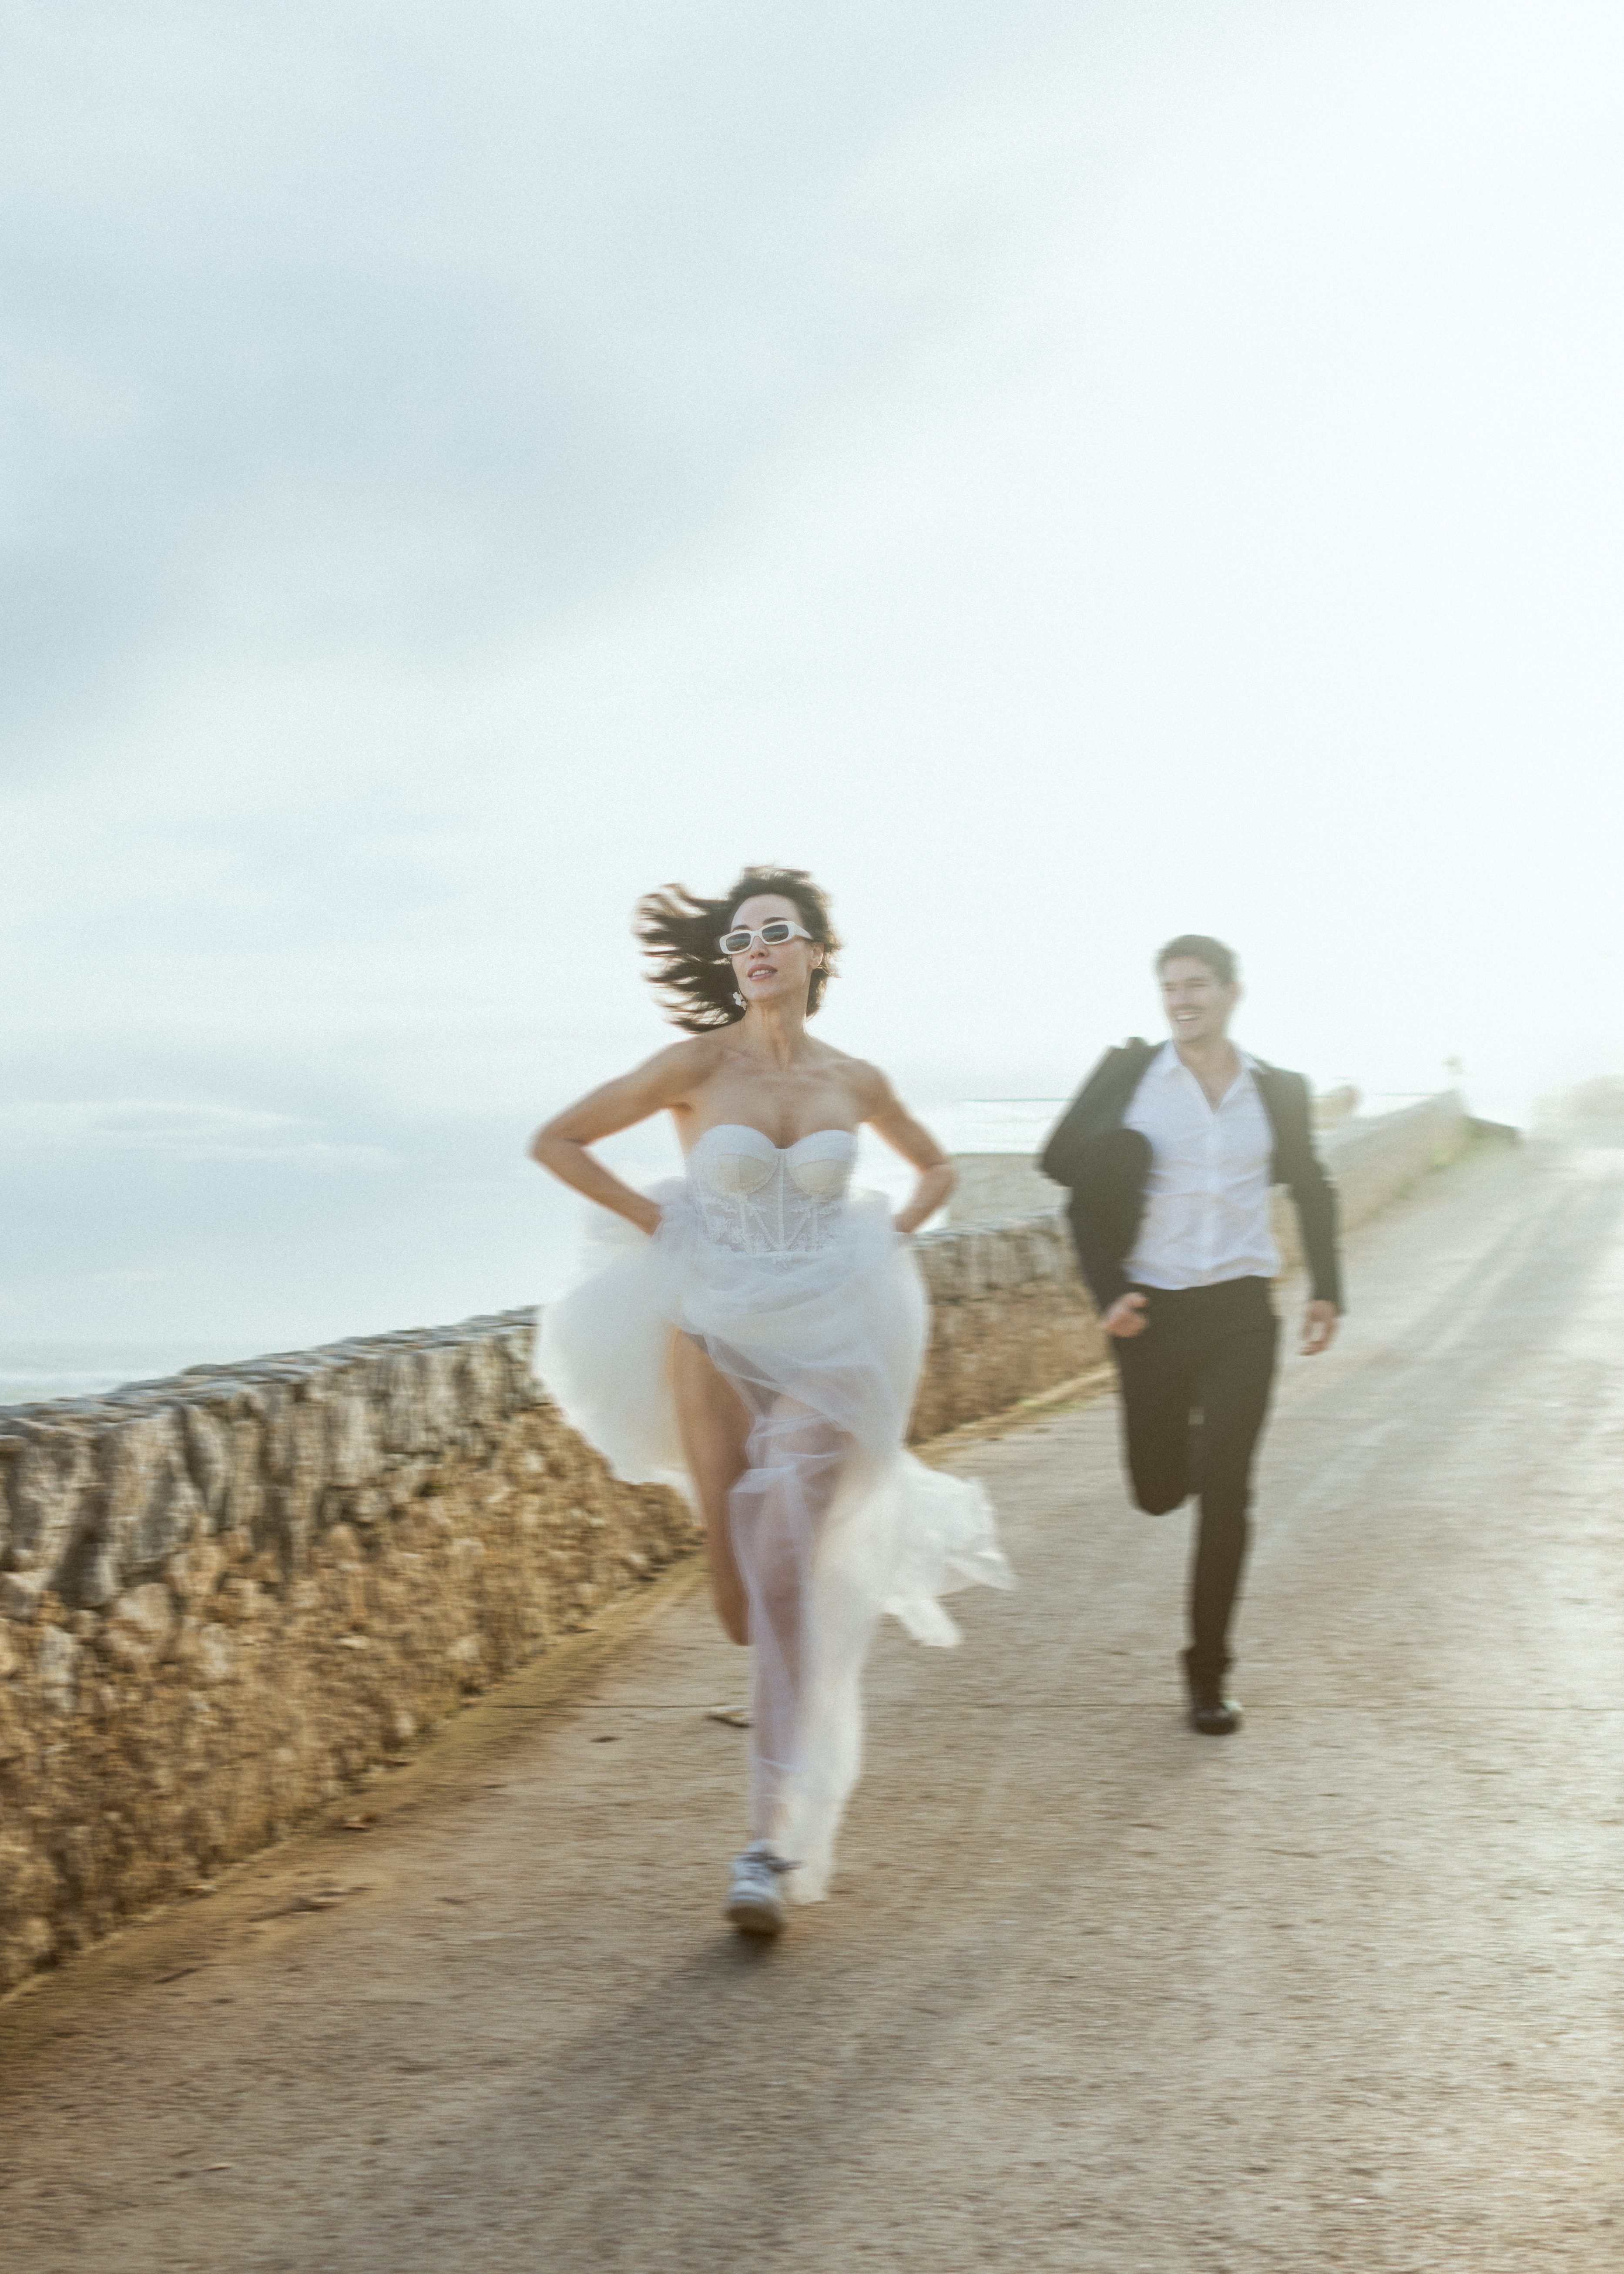 Capturing Love: Barcelona Wedding Photoshoot